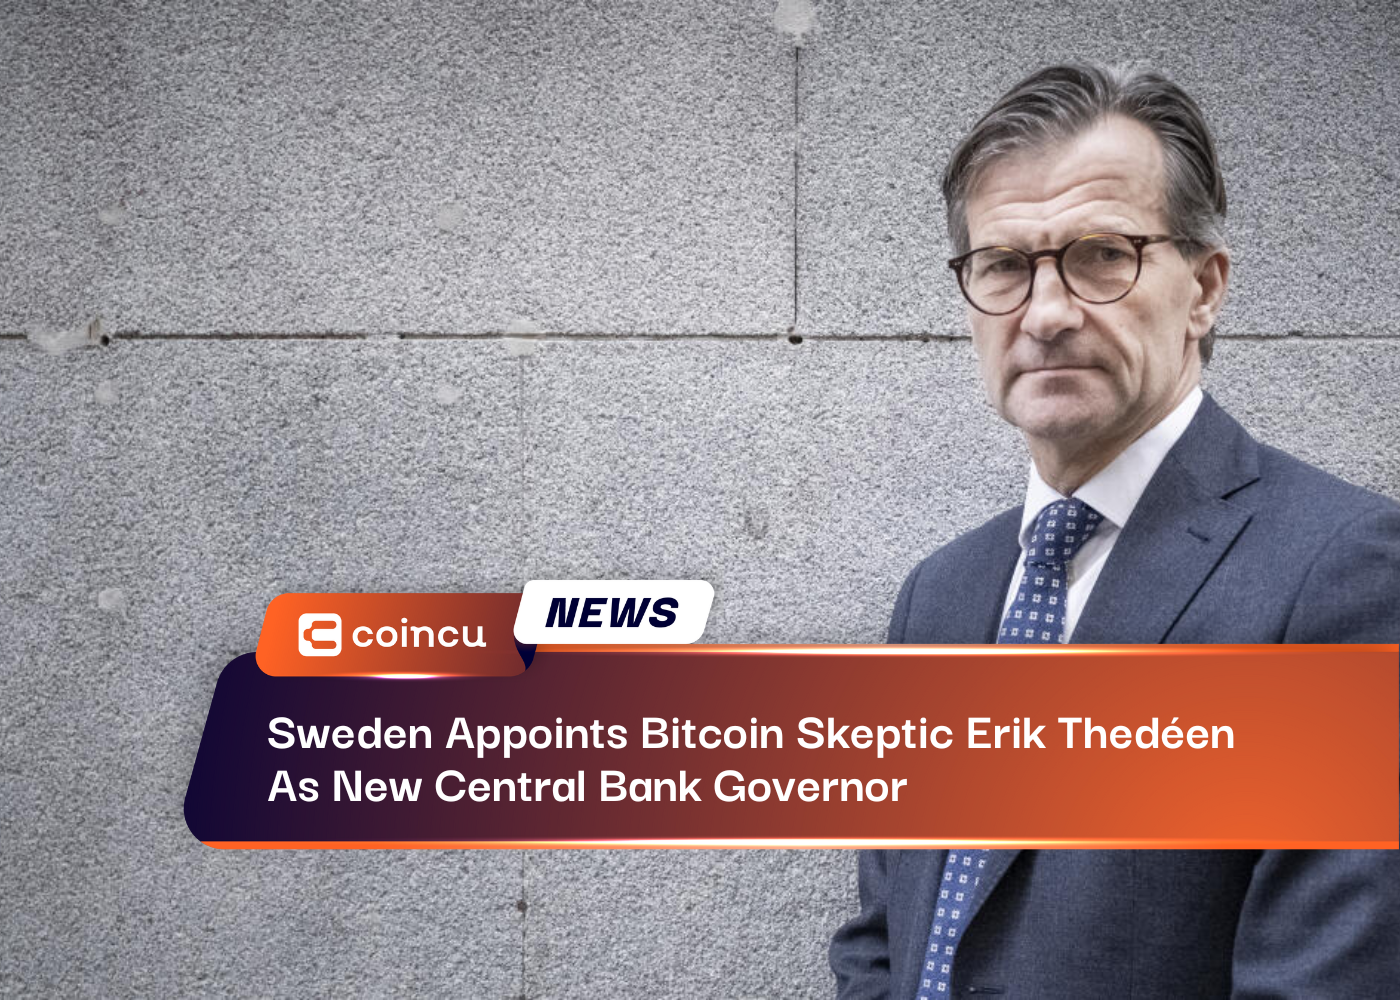 Sweden Appoints Bitcoin Skeptic Erik Thedéen as New Central Bank Governor